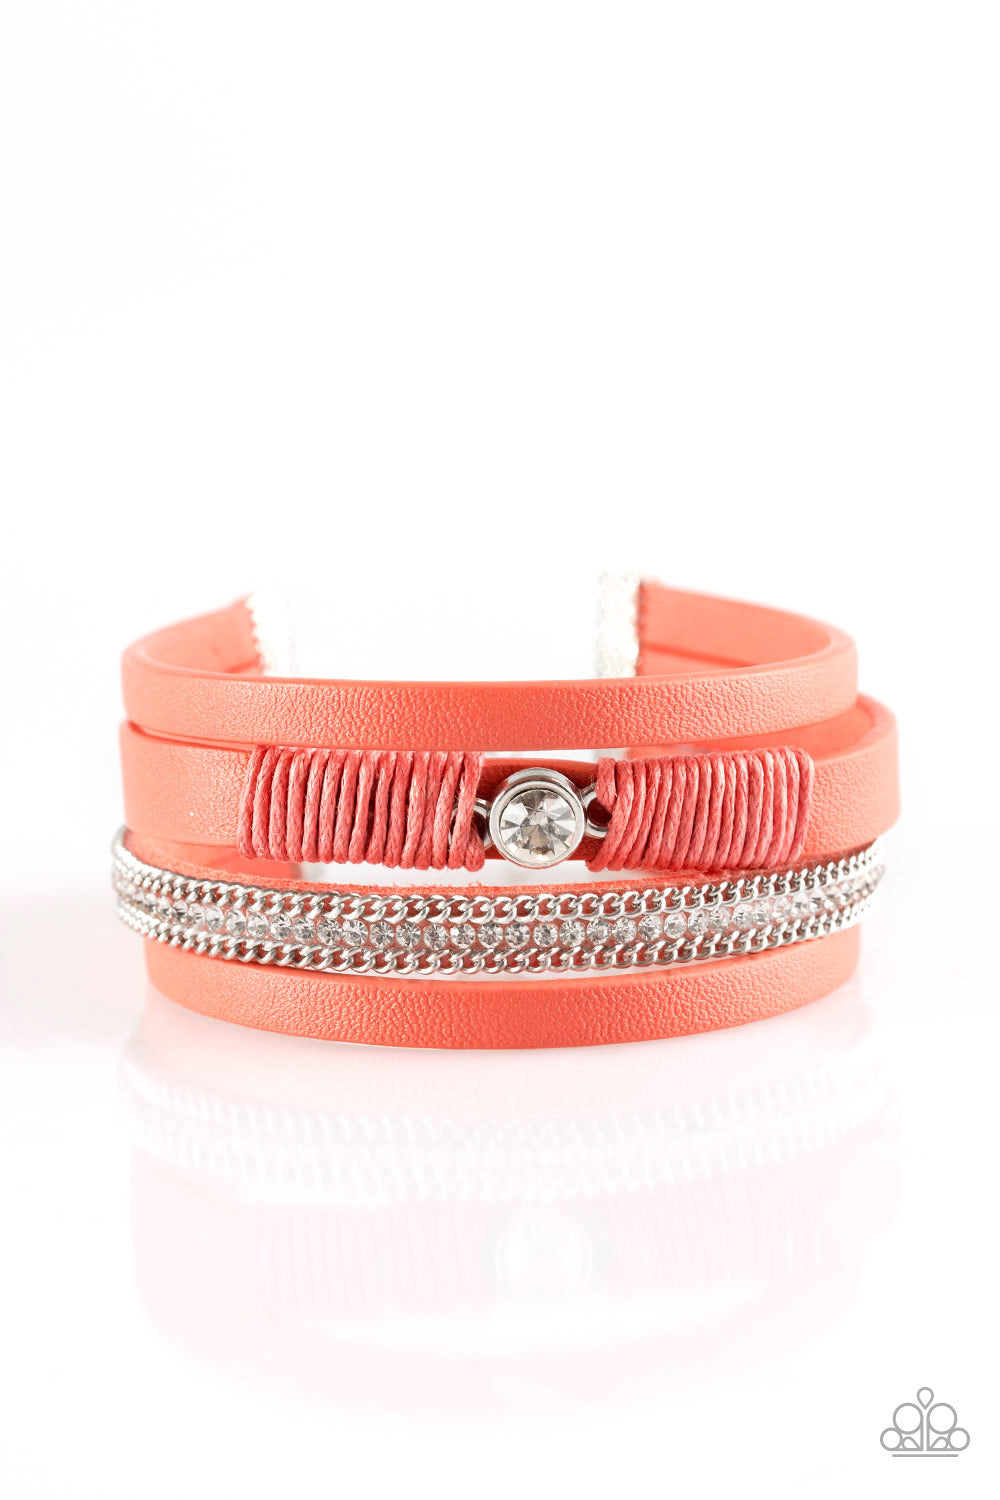 Catwalk Craze Orange Bracelet - Paparazzi Accessories 